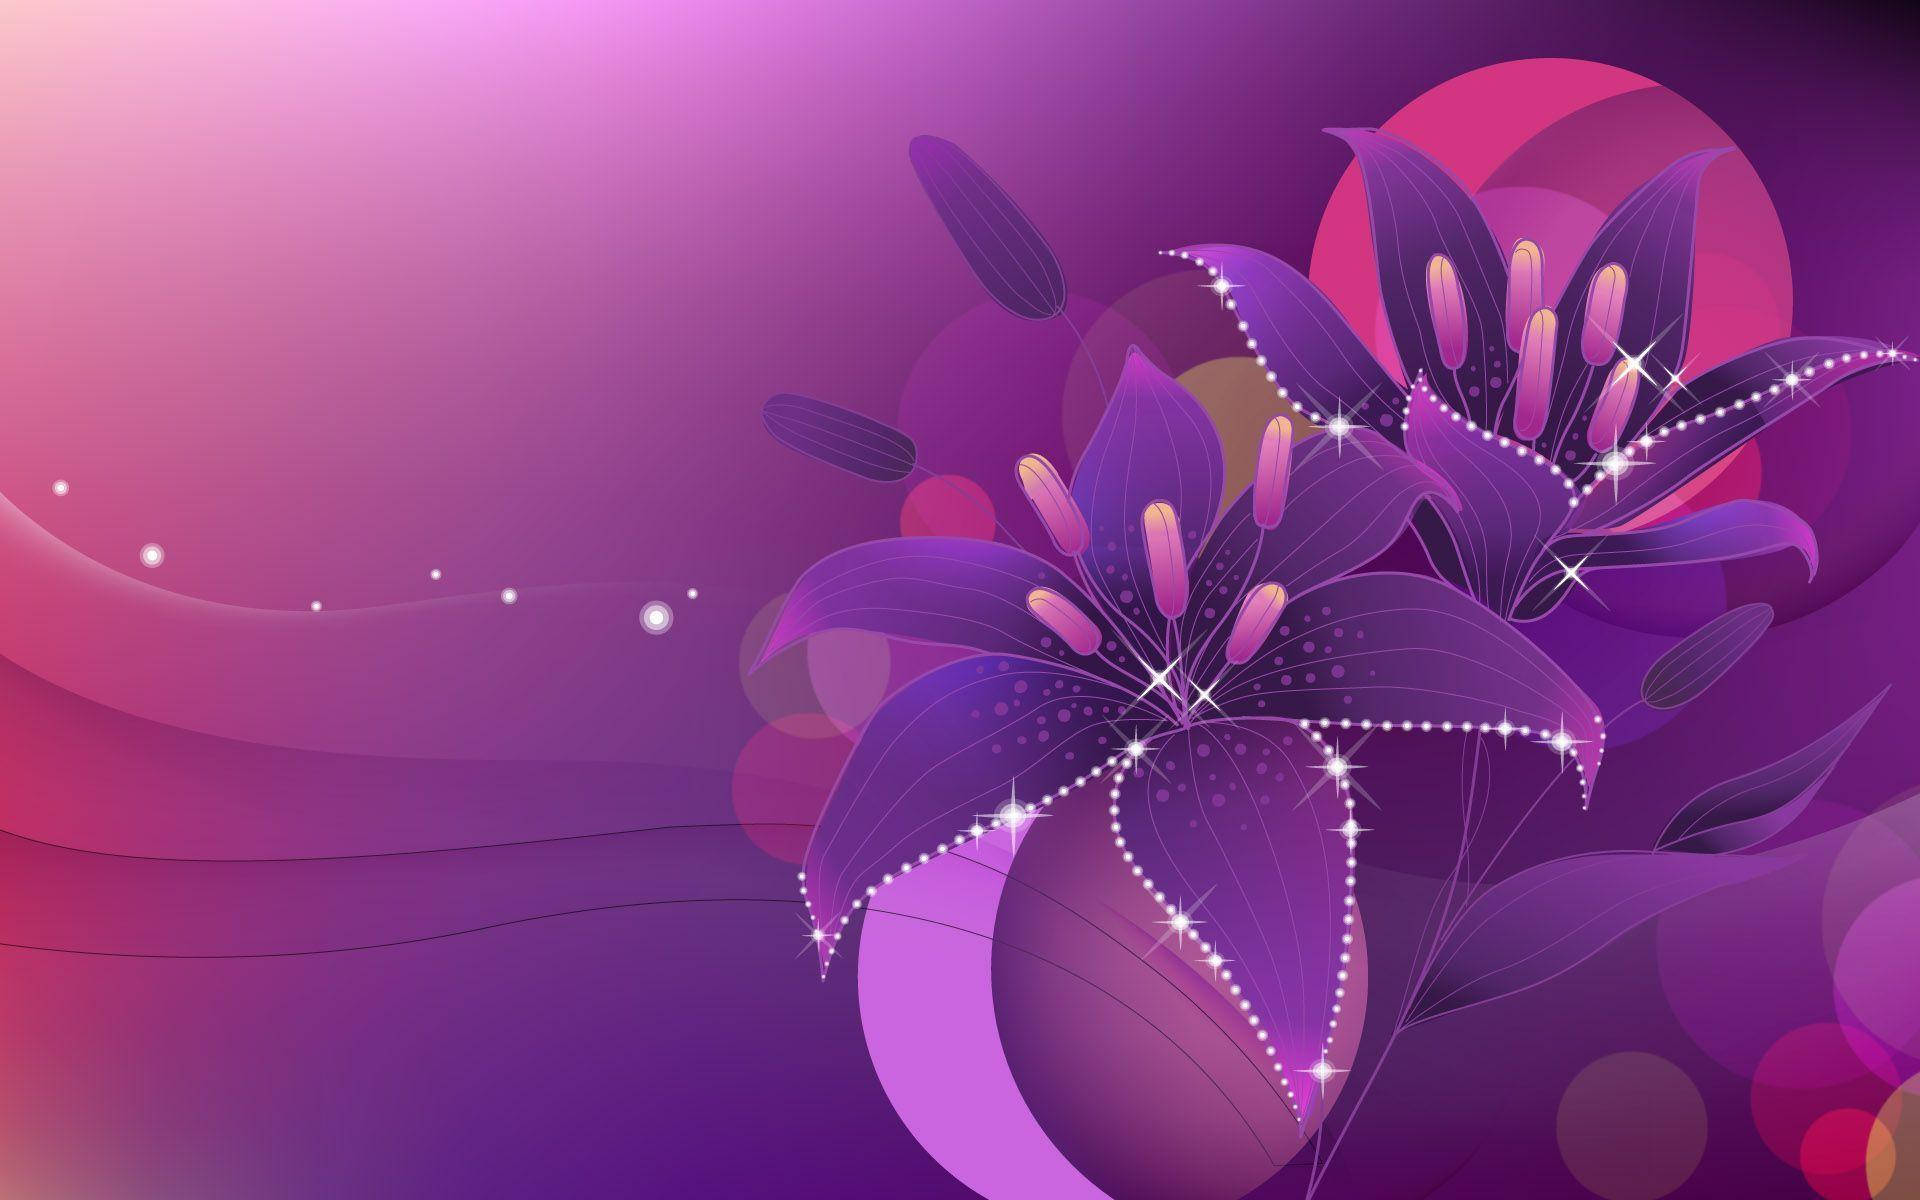 Awaken creativity and stay inspired using this stunning purple flower laptop Wallpaper